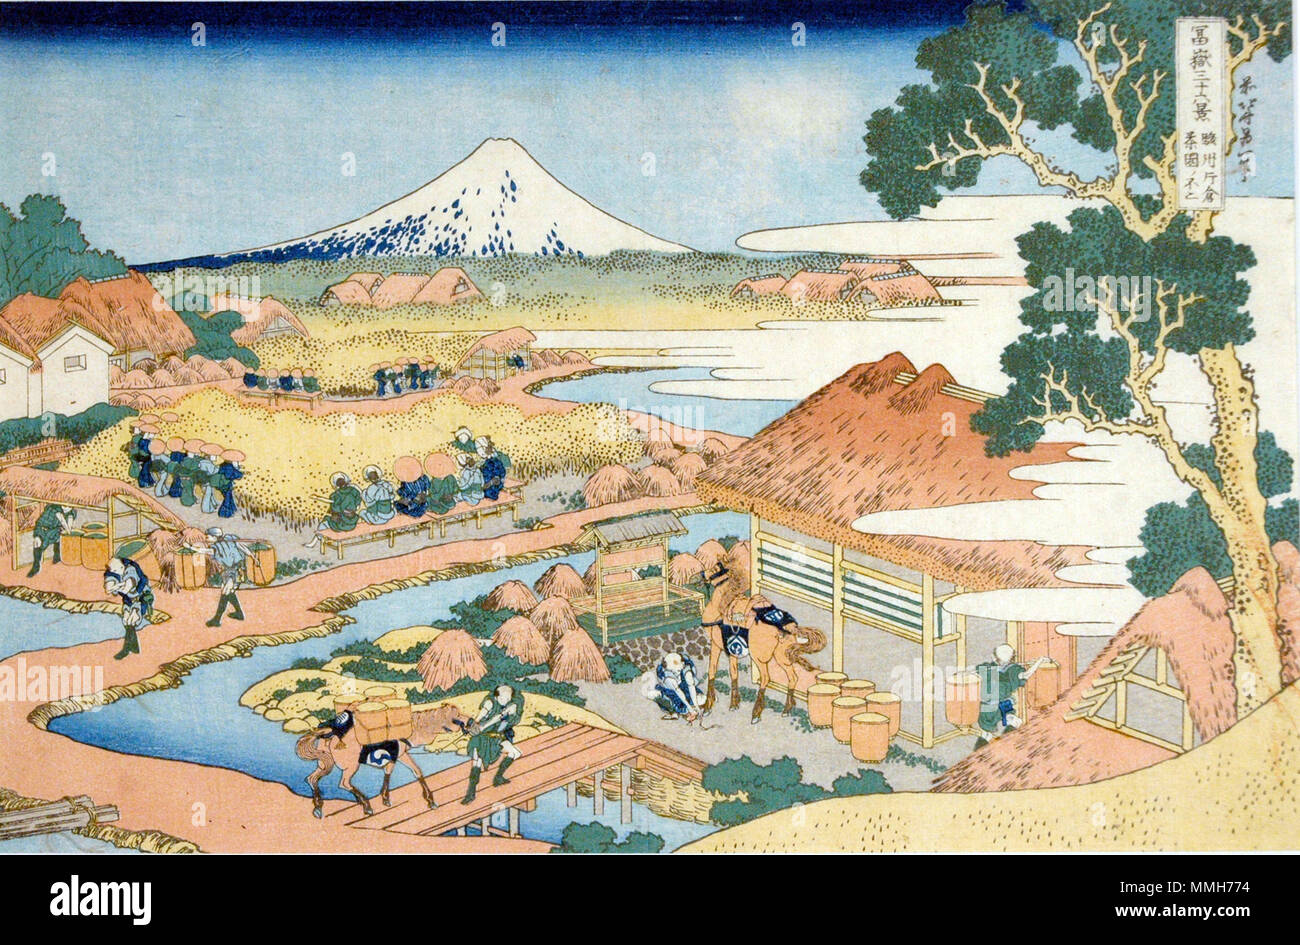 . English: Accession Number: 1957.171 Display Artist: Katsushika Hokusai Display Title: Fuji from the Tea Plantation of Katakura in Suruga Province Series Title: Thirty-six Views of Mount Fuji Suite Name: Fugaku sanjurokkei Creation Date: ca. 1831-1834 Height: 10 in. Width: 14 13/16 in. Display Dimensions: 10 in. x 14 13/16 in. (25.4 cm x 37.62 cm) Publisher: Nishimuraya Yohachi Credit Line: Bequest of Mrs. Cora Timken Burnett Label Copy: 'El artista utilizo la tcnica poco usual de lneas blancas, en lugar de negras, para representar lluvia torrencial. La lluvia que cae en el quinceavo da del t Stock Photo